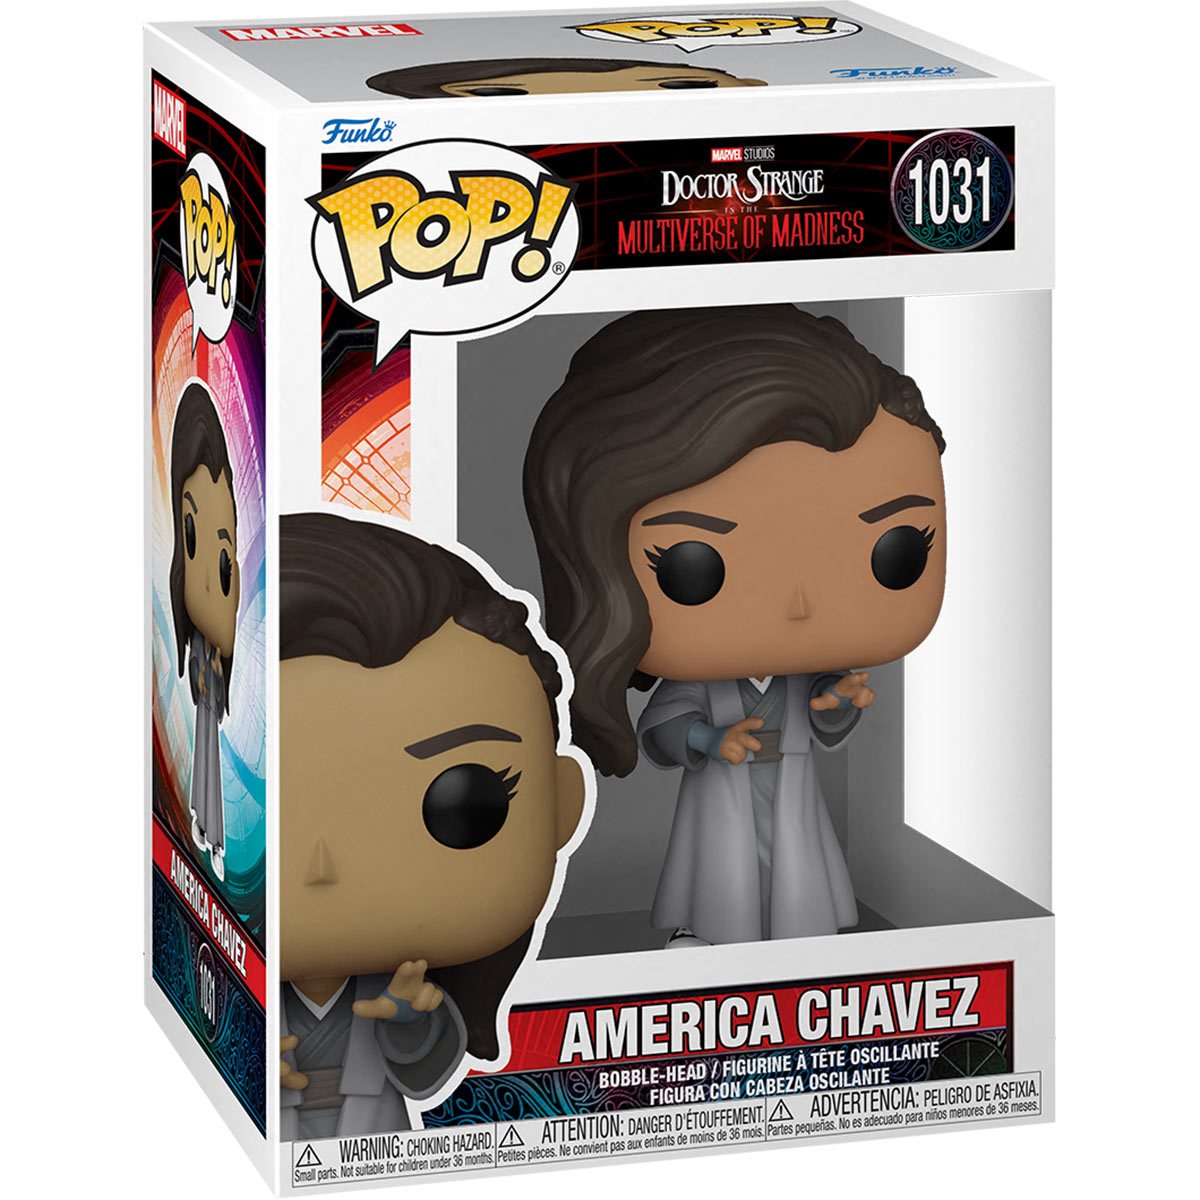 Marvel: Doctor Strange - America Chavez Pop! Vinyl Figure (1031)